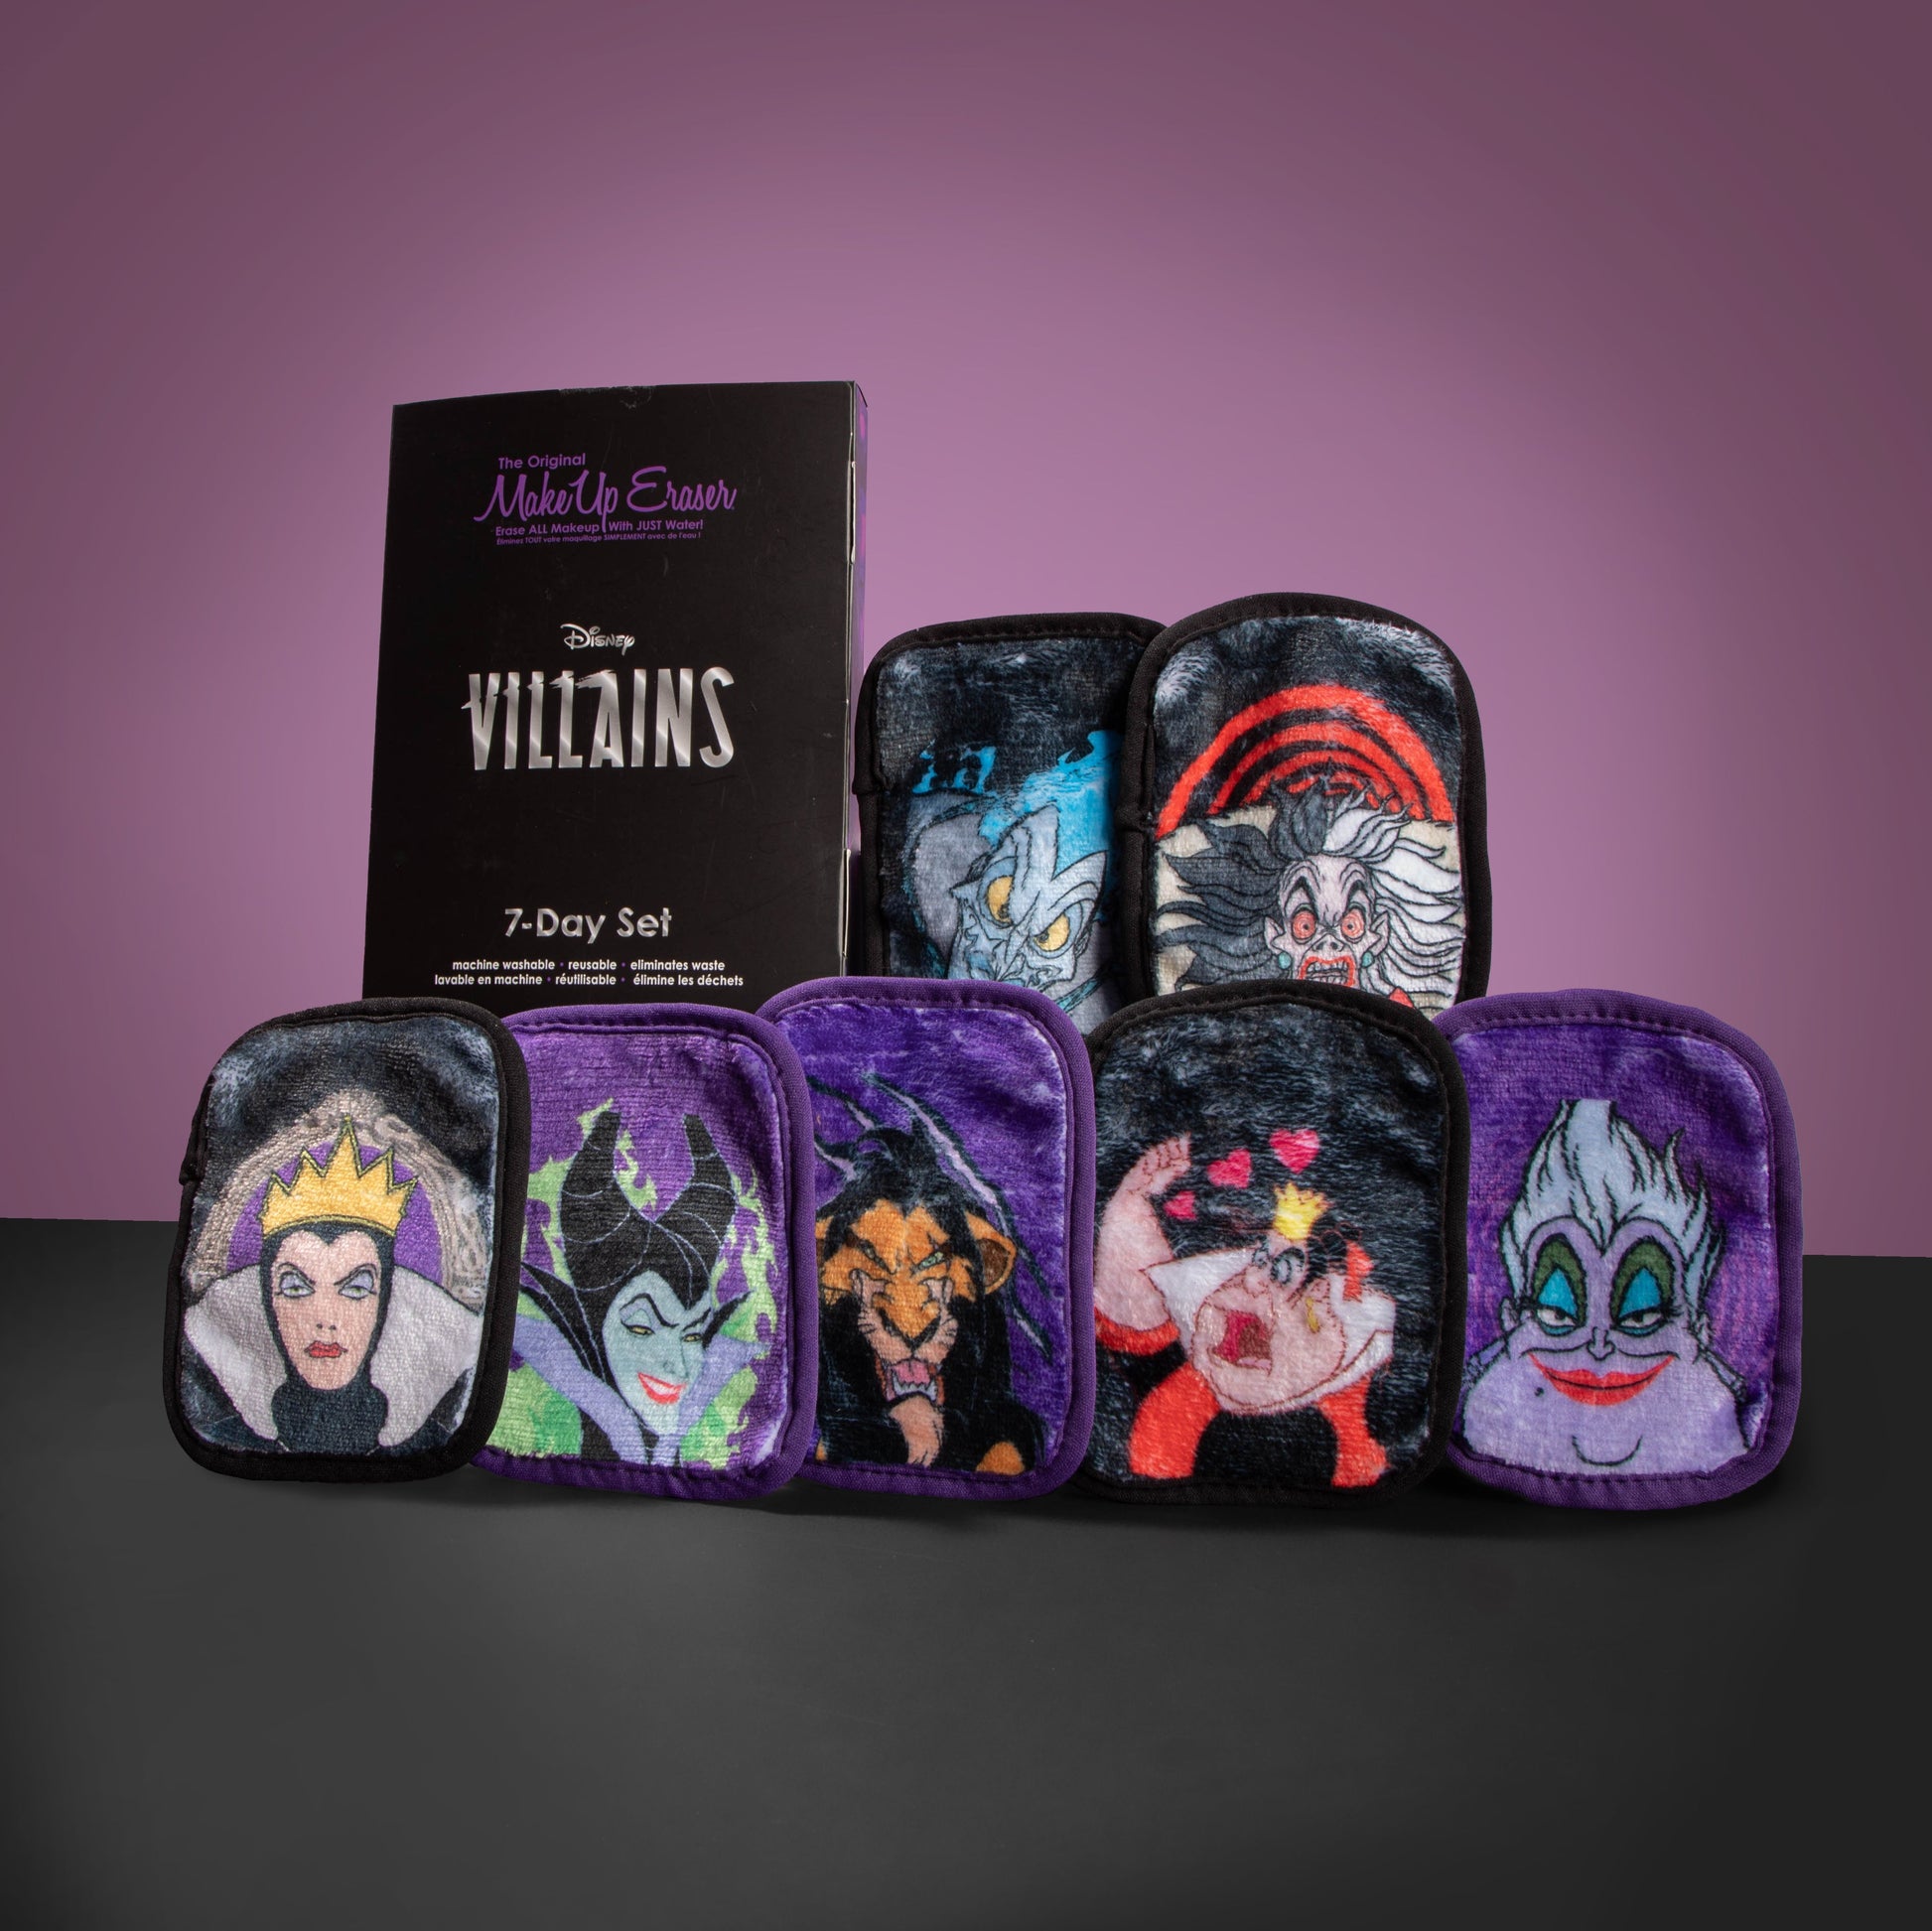 Disney Villains 7-Day Set MakeUp Eraser cloths propped up next to packaging.